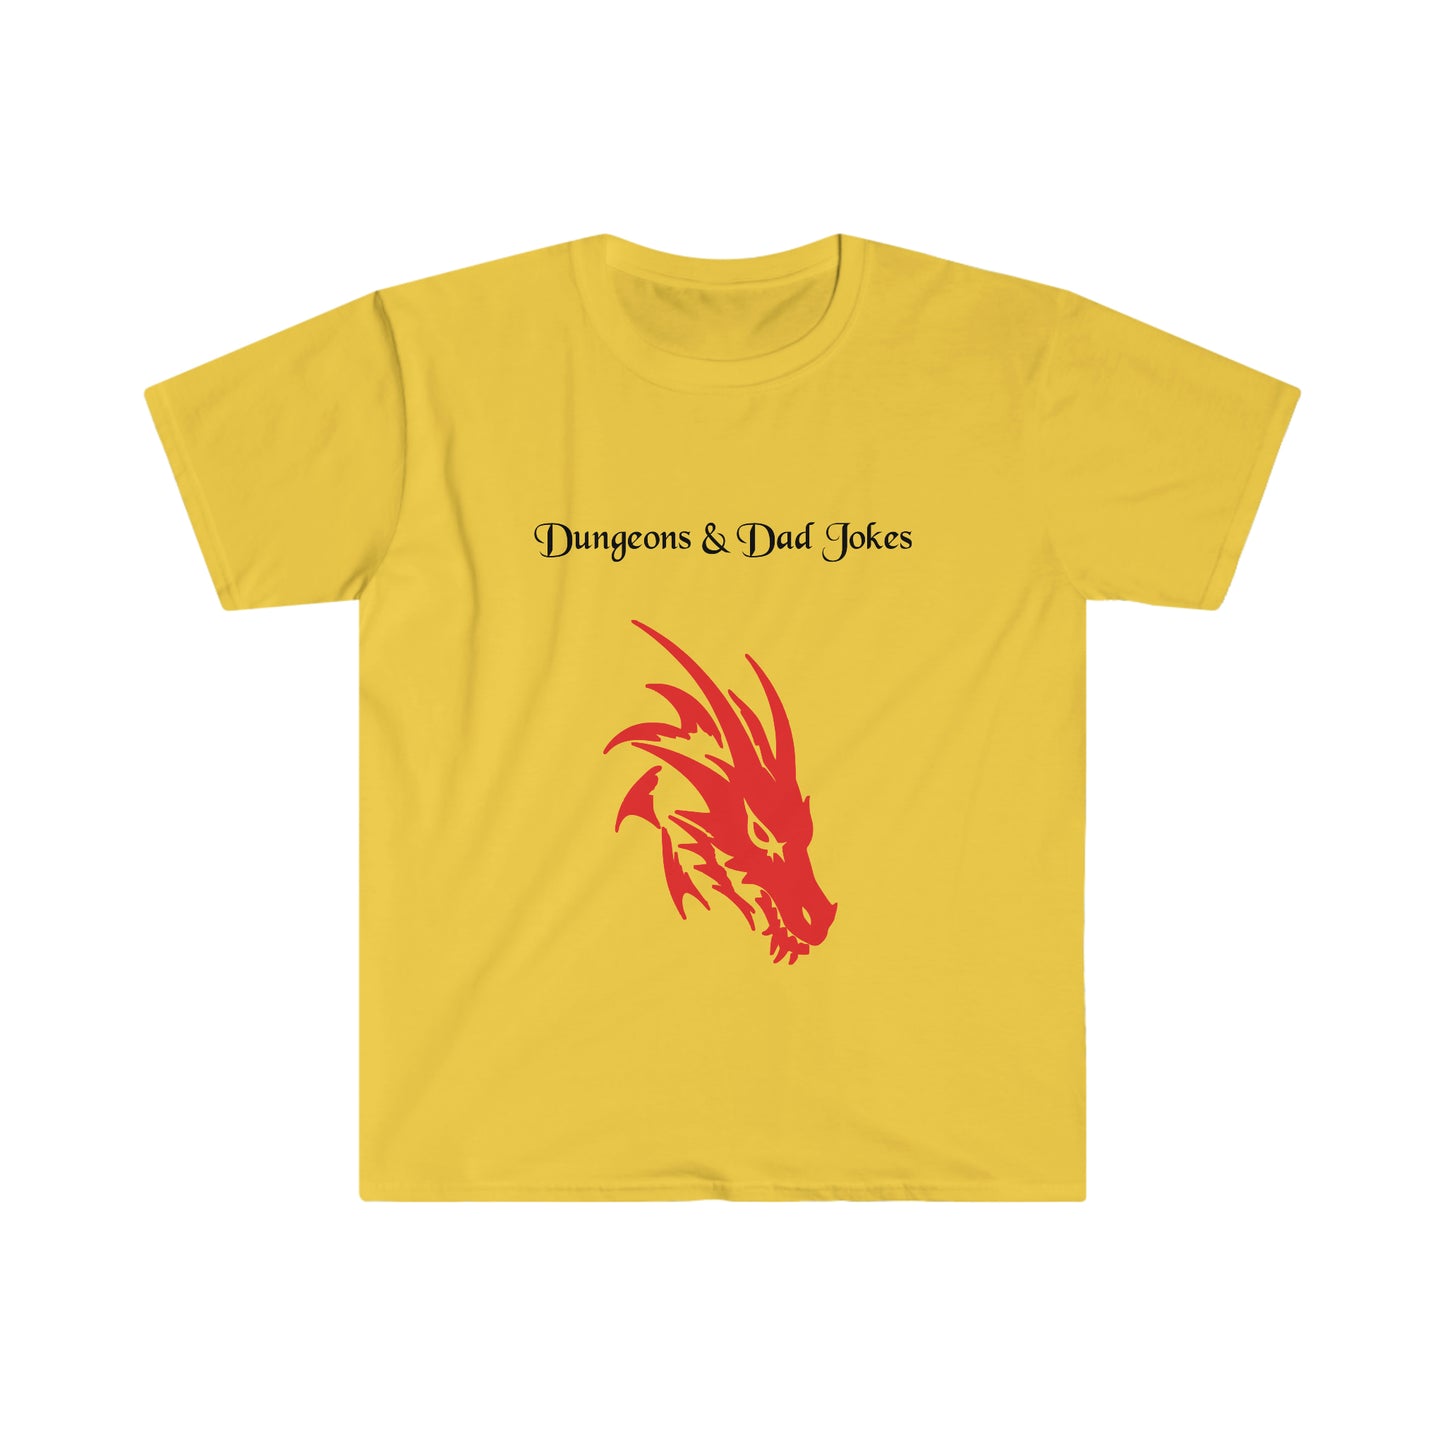 Dungeons & Dad Jokes, Dragon T-Shirt, Funny Gift, Dad Gift, Nerd Gift, Geek Gift, Soft-Style